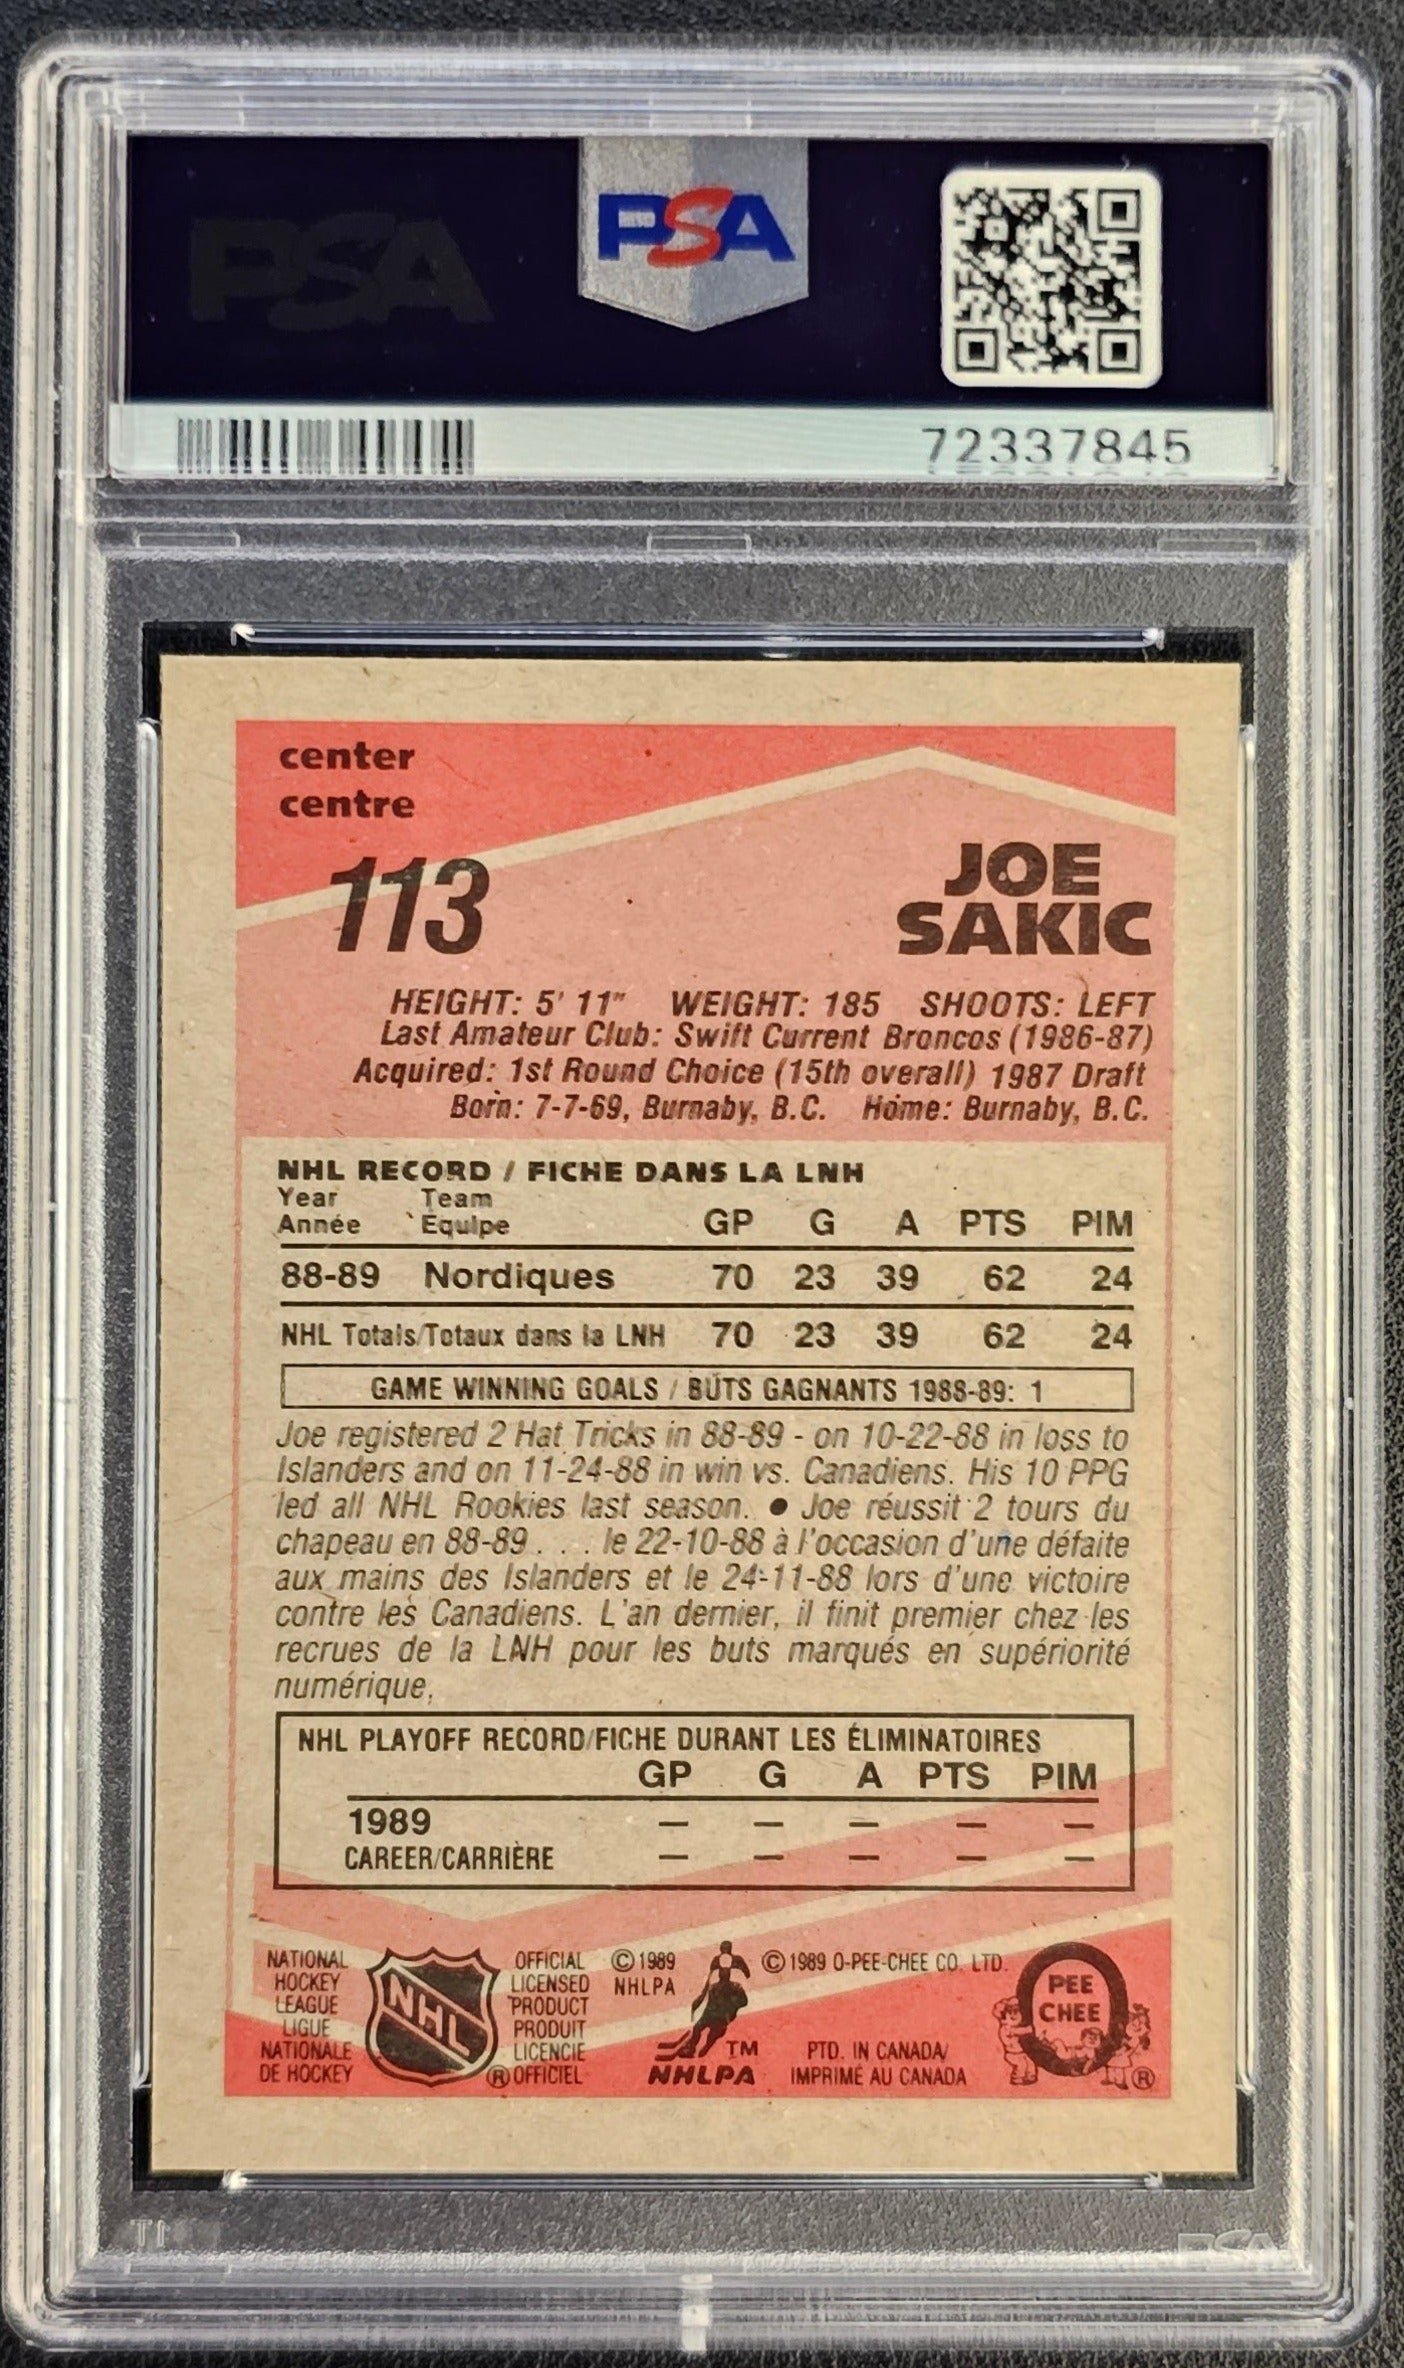 Joe Sakic Rookie Cards: Value, Tracking & Hot Deals